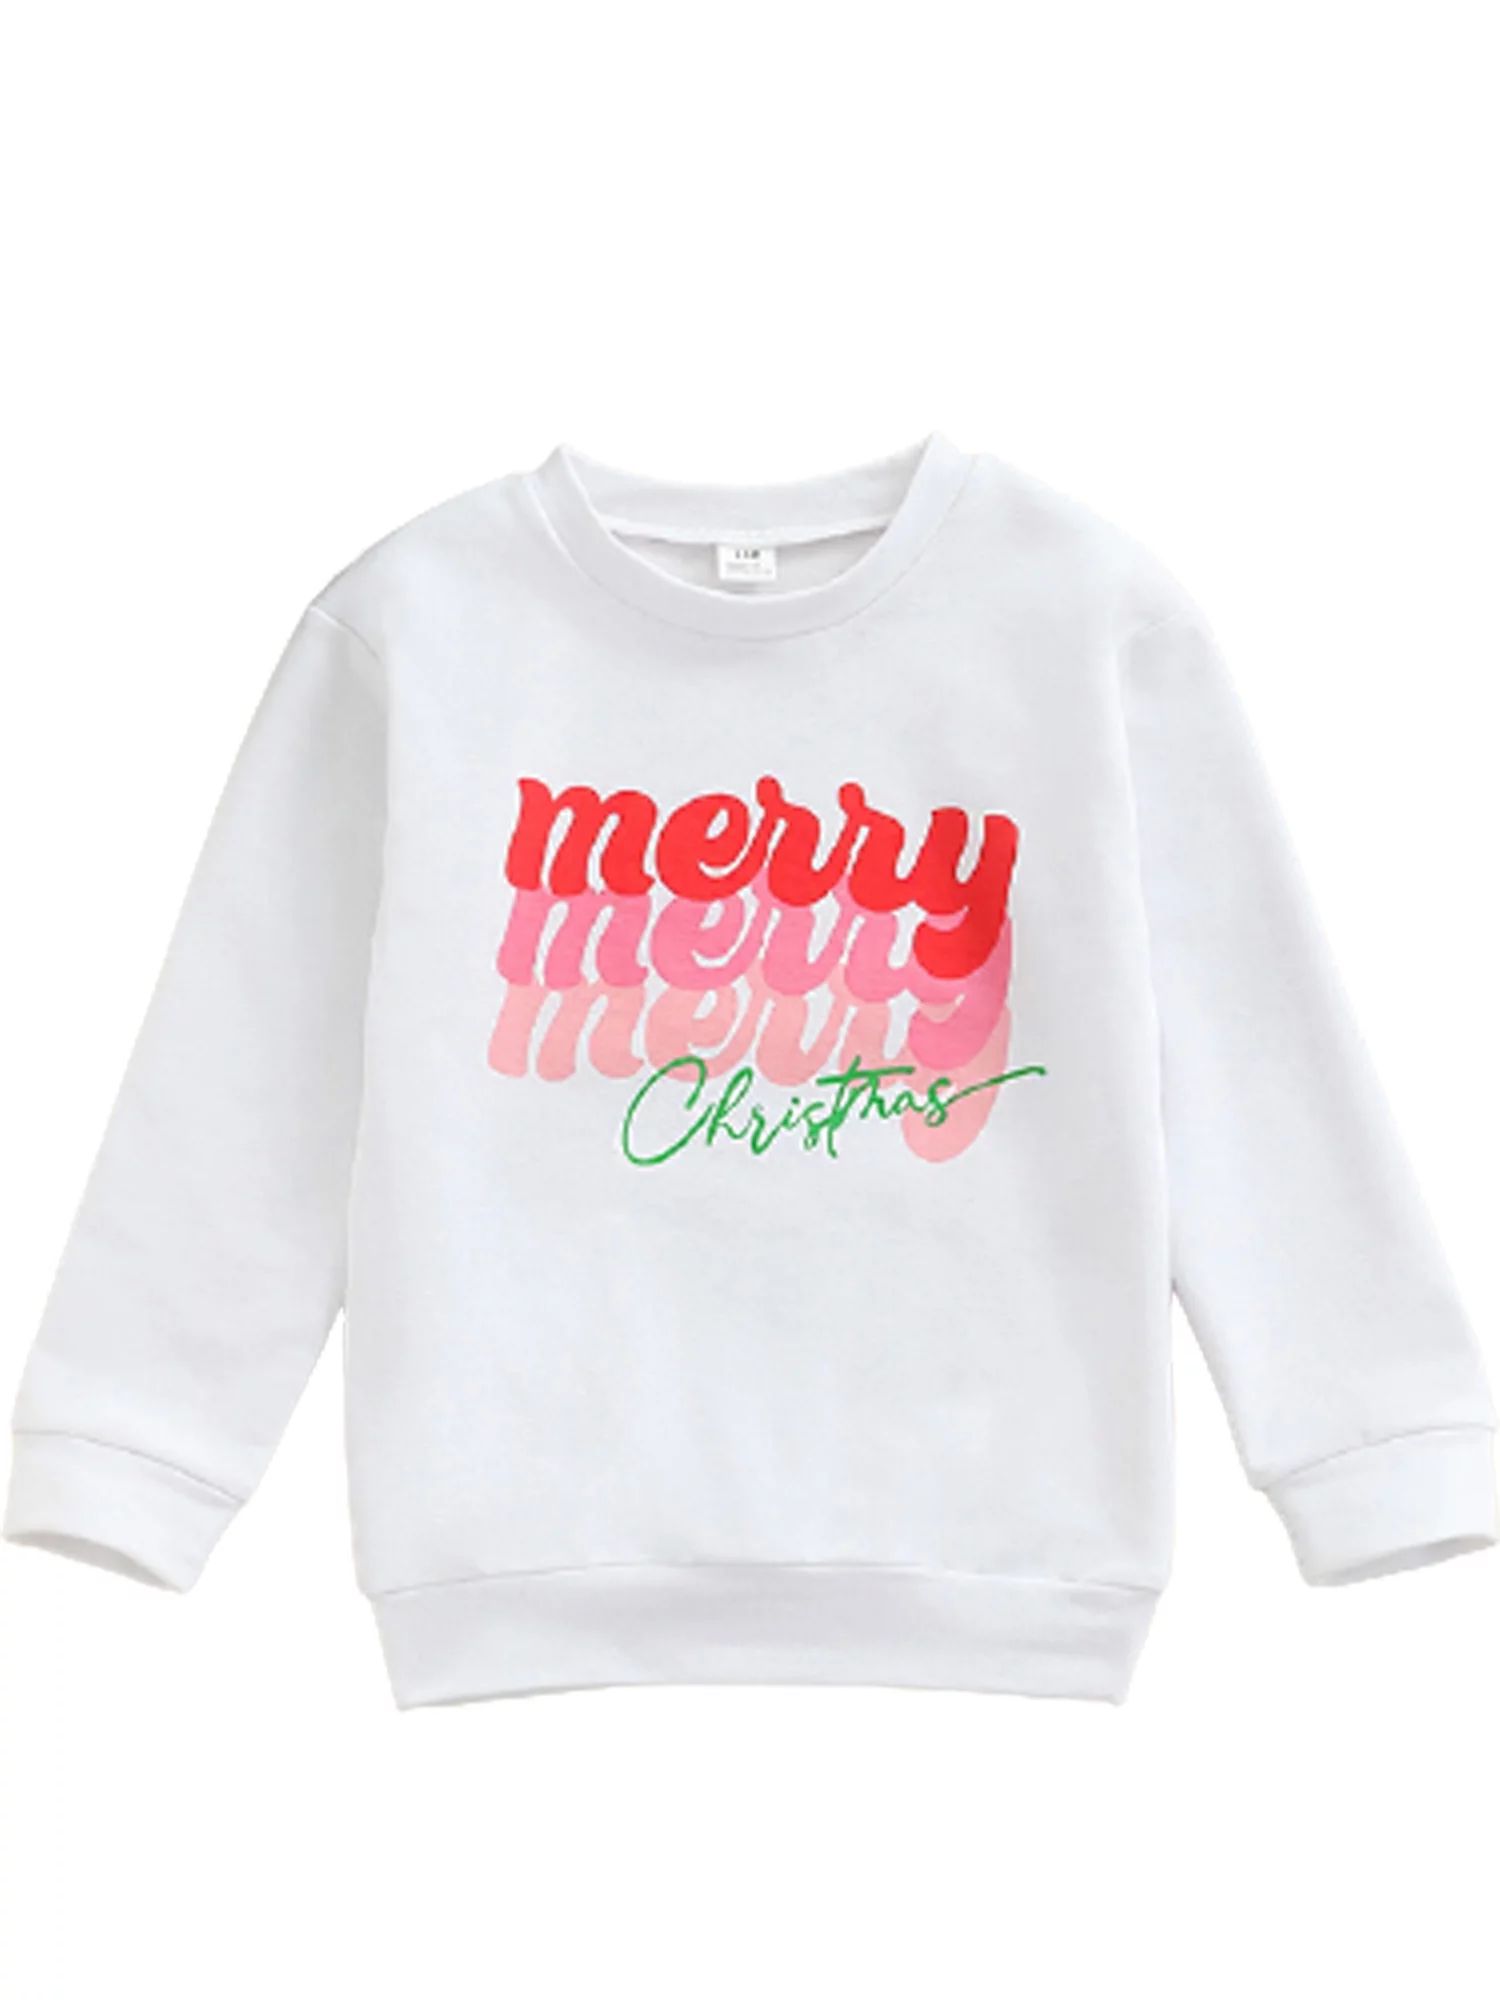 Dewadbow Toddler Baby Boy Girl Christmas Sweatshirt Kids Long Sleeve Pullover Tops Fall Winter Cl... | Walmart (US)